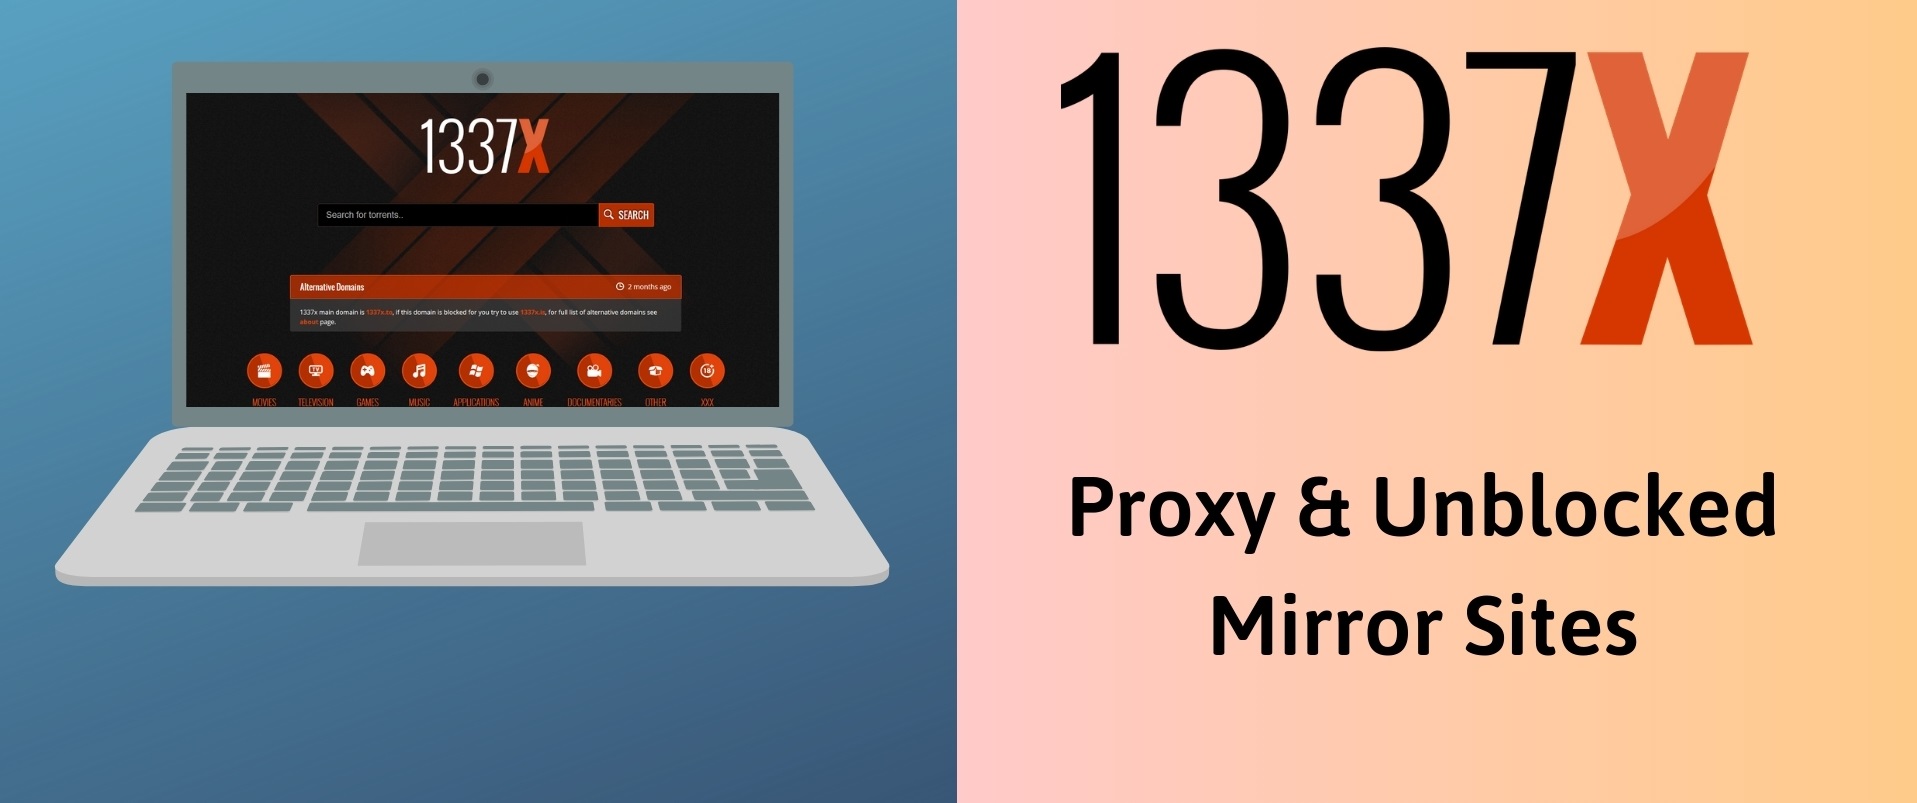 1337x Proxy and Alternatives